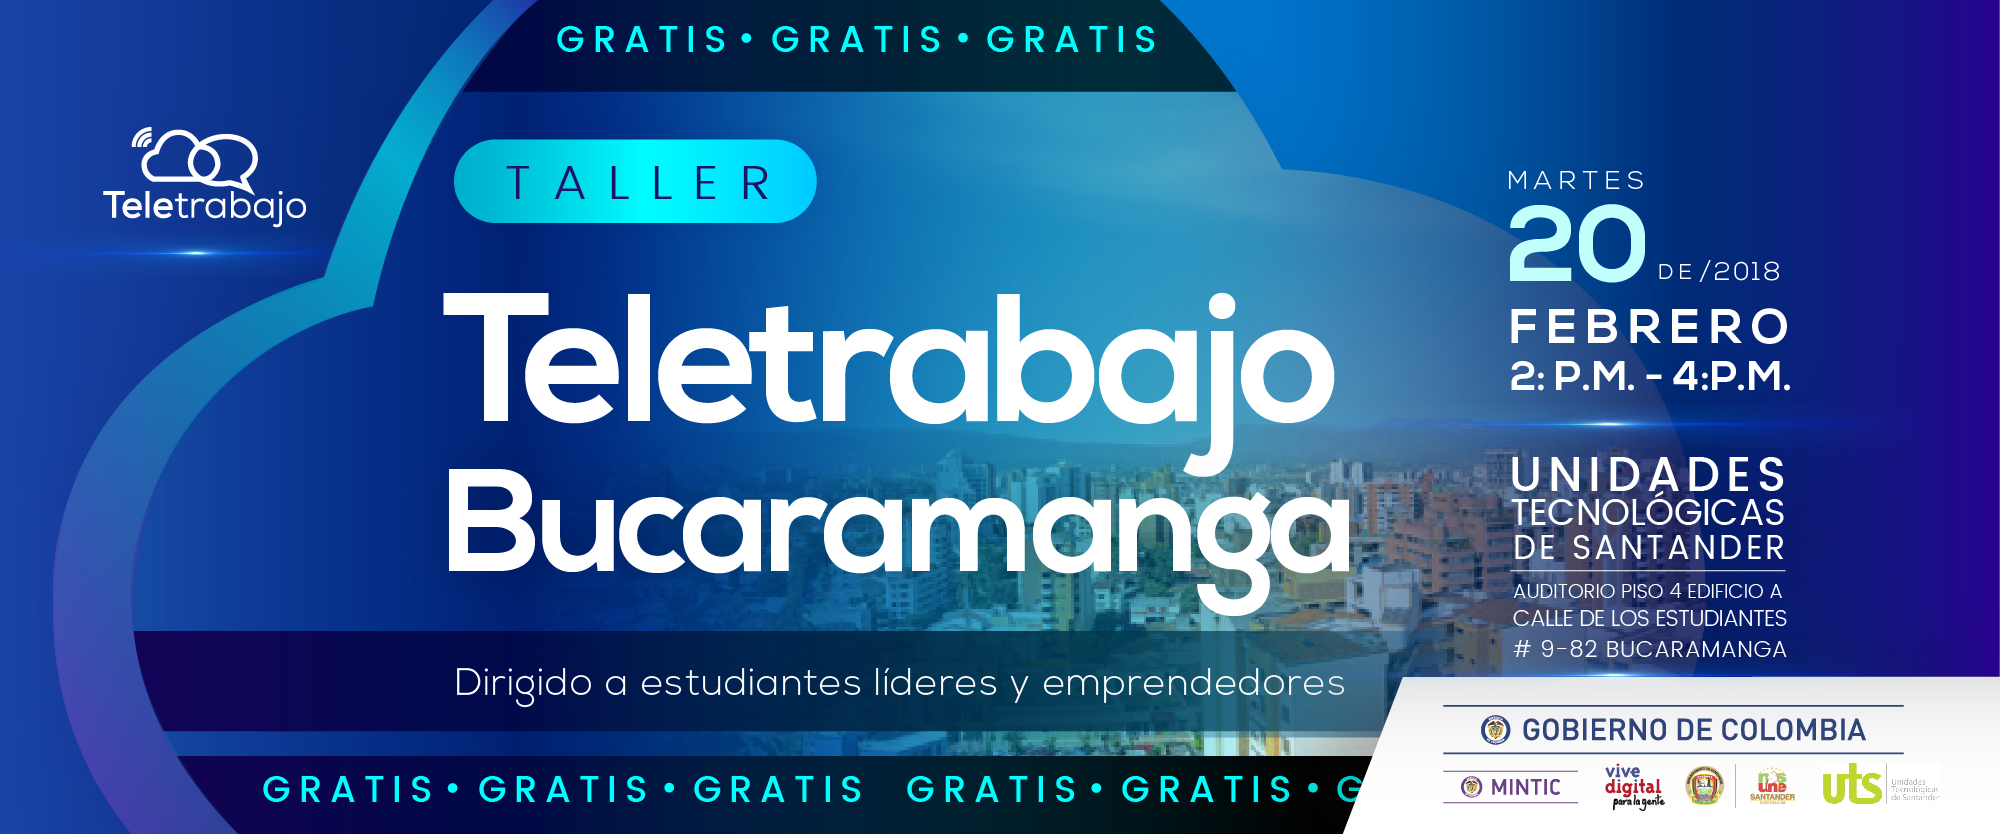 El Teletrabajo llega recargado a Bucaramanga en 2018